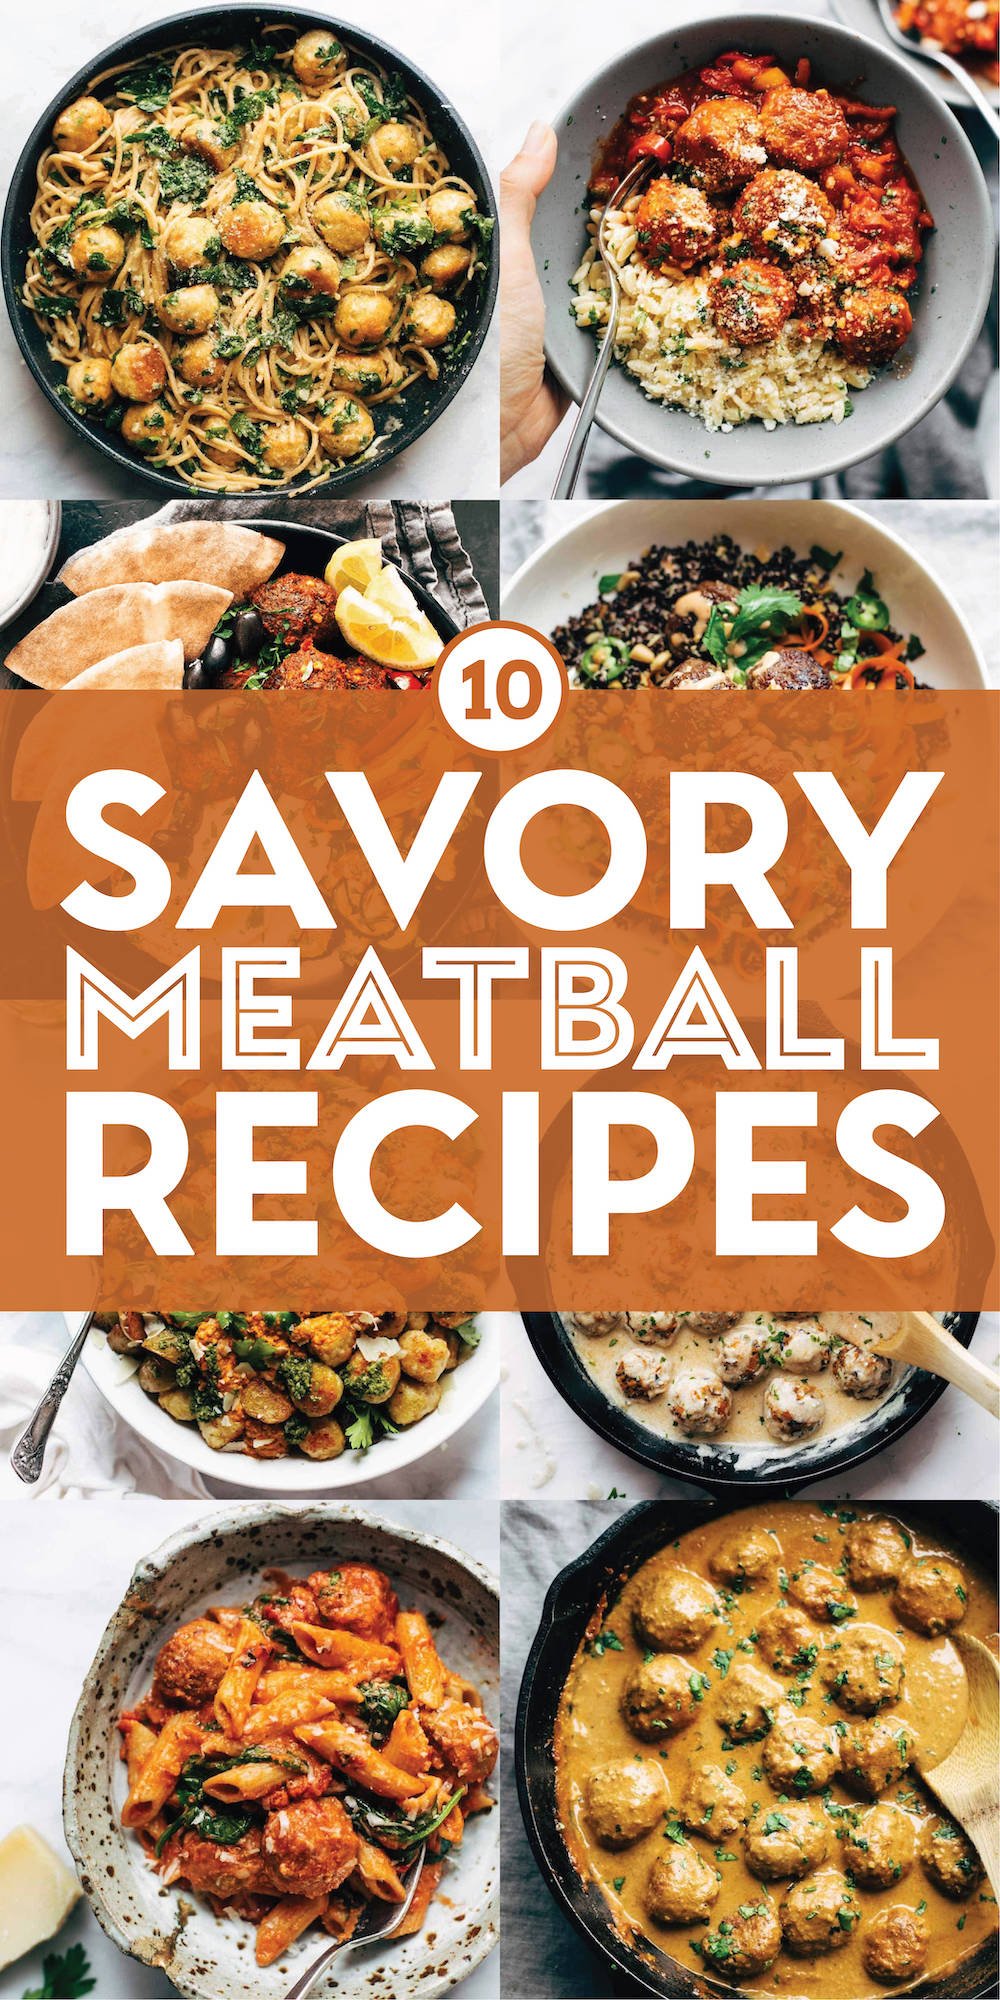 https://pinchofyum.com/wp-content/uploads/Savory-Meatball-Recipes-Pin-01.jpg